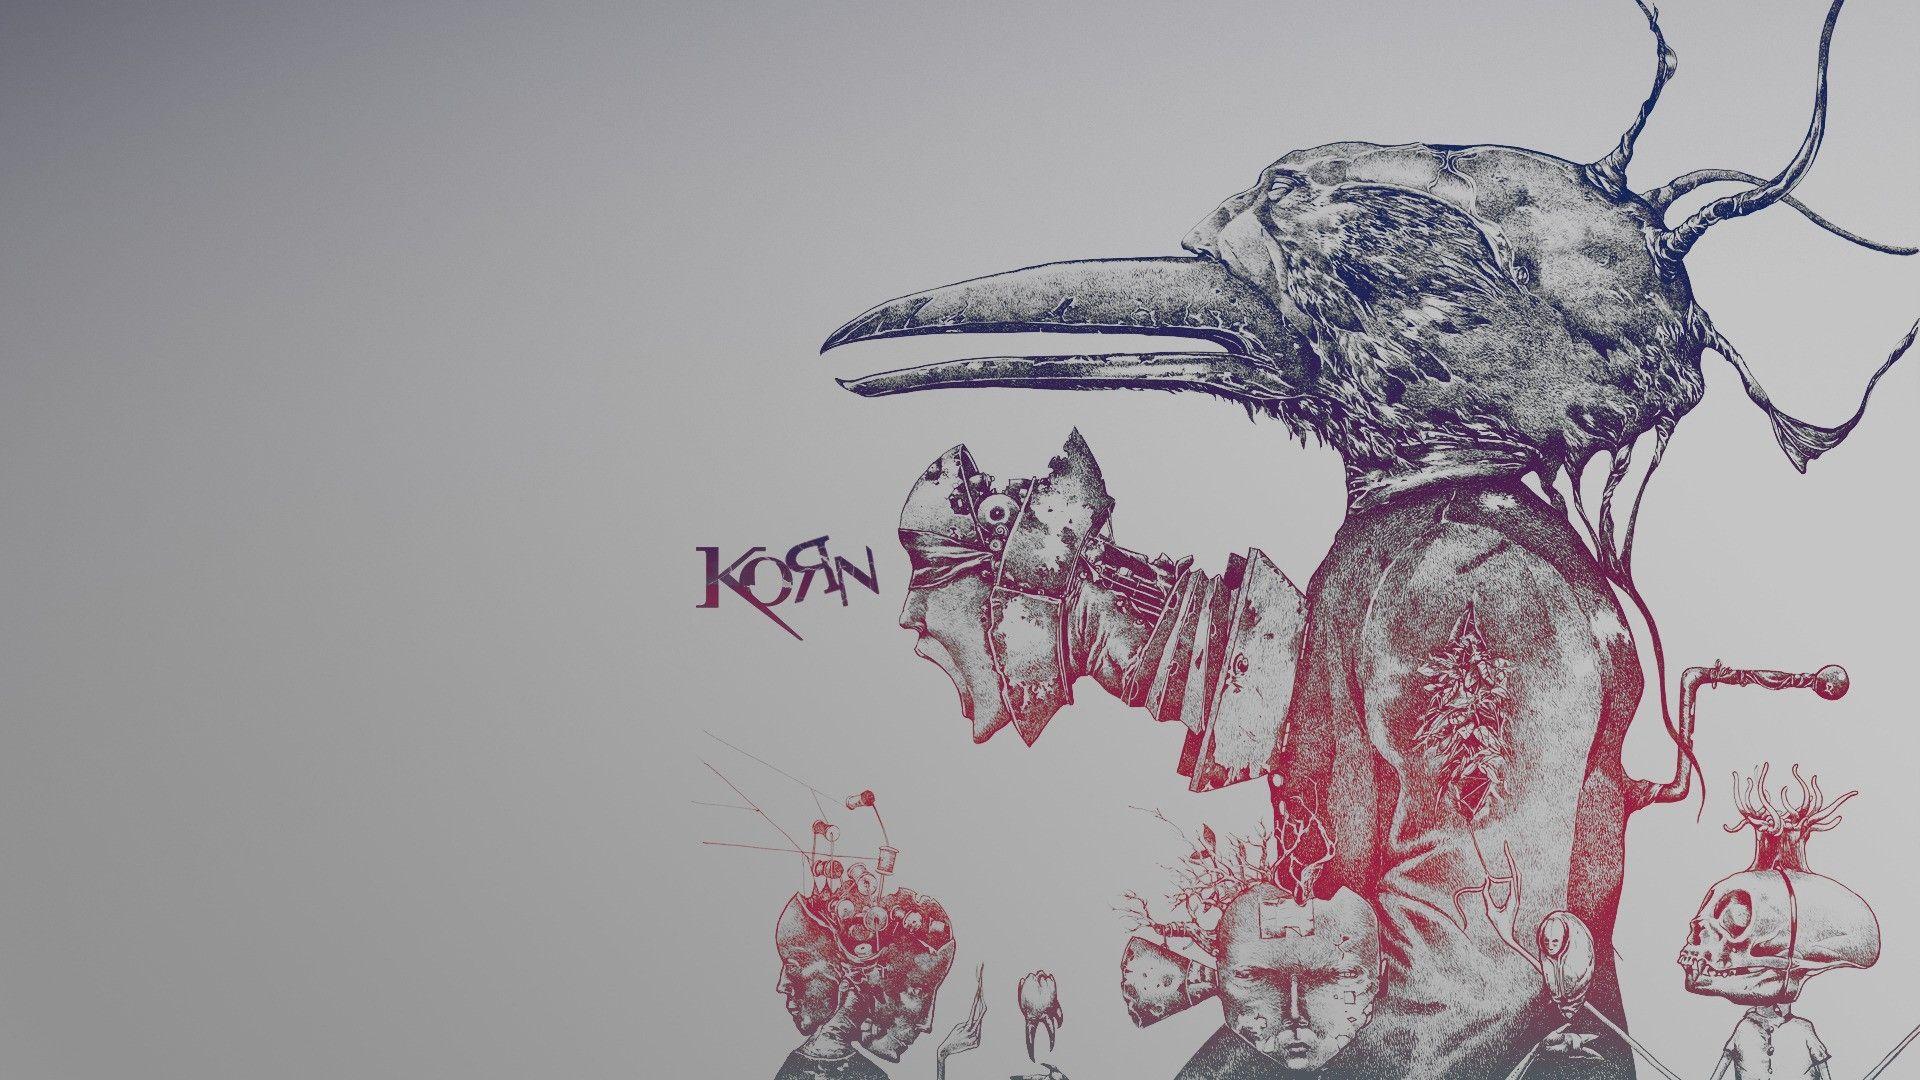 KoRn Wallpaper by rabidmedia on DeviantArt